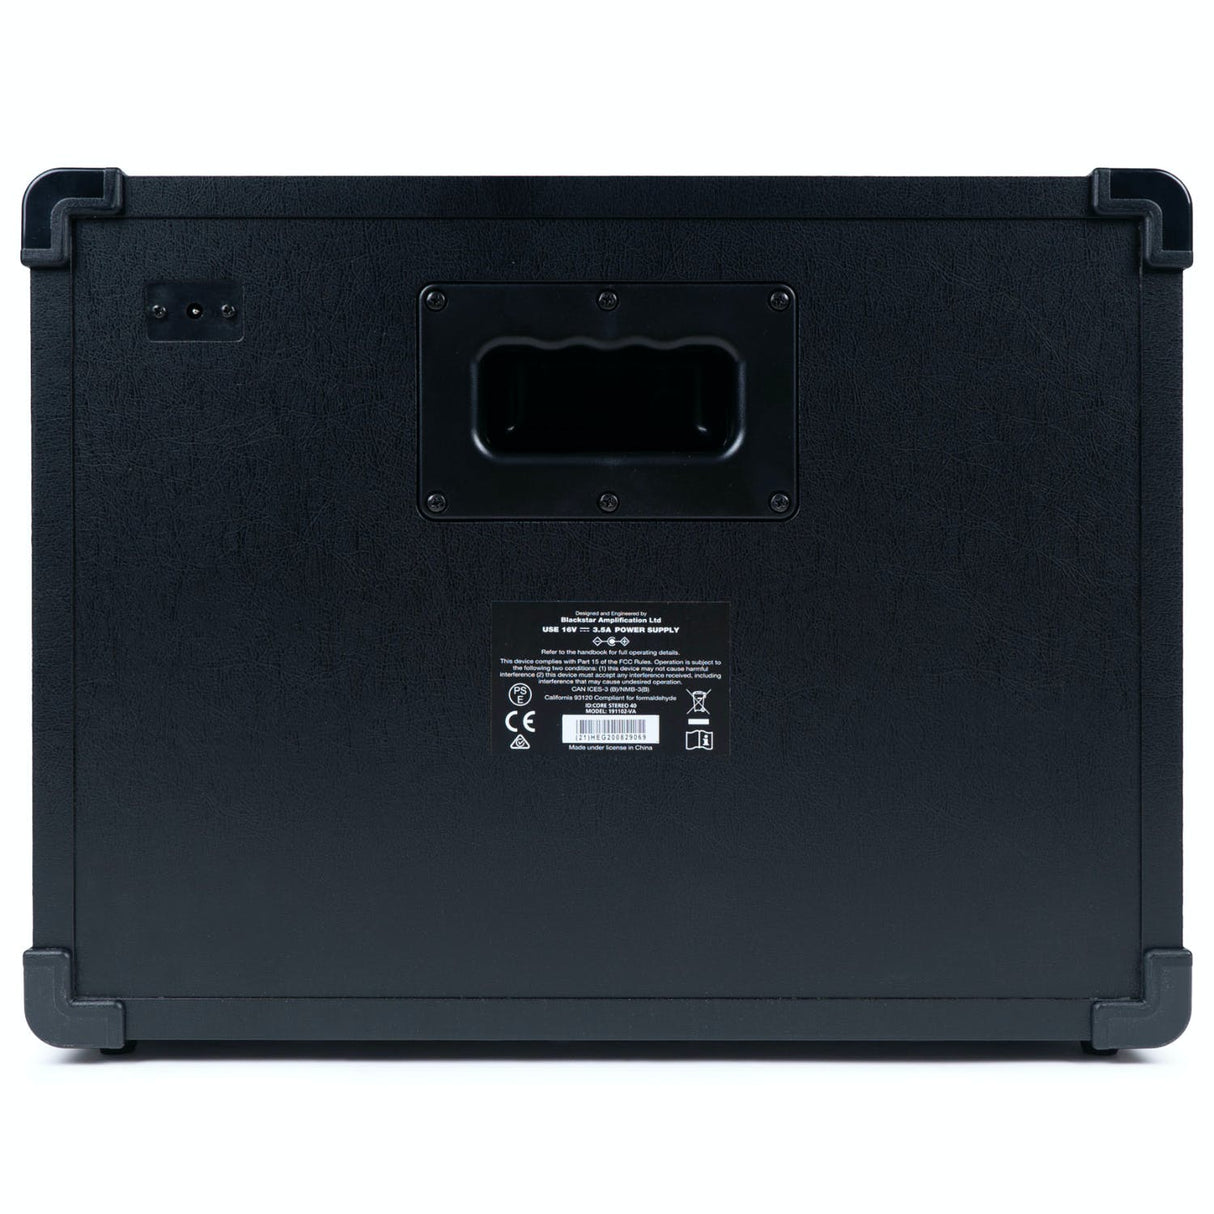 Blackstar ID:Core V3 40w 2x6.5" Stereo Digital Amp Combo - Blackstar